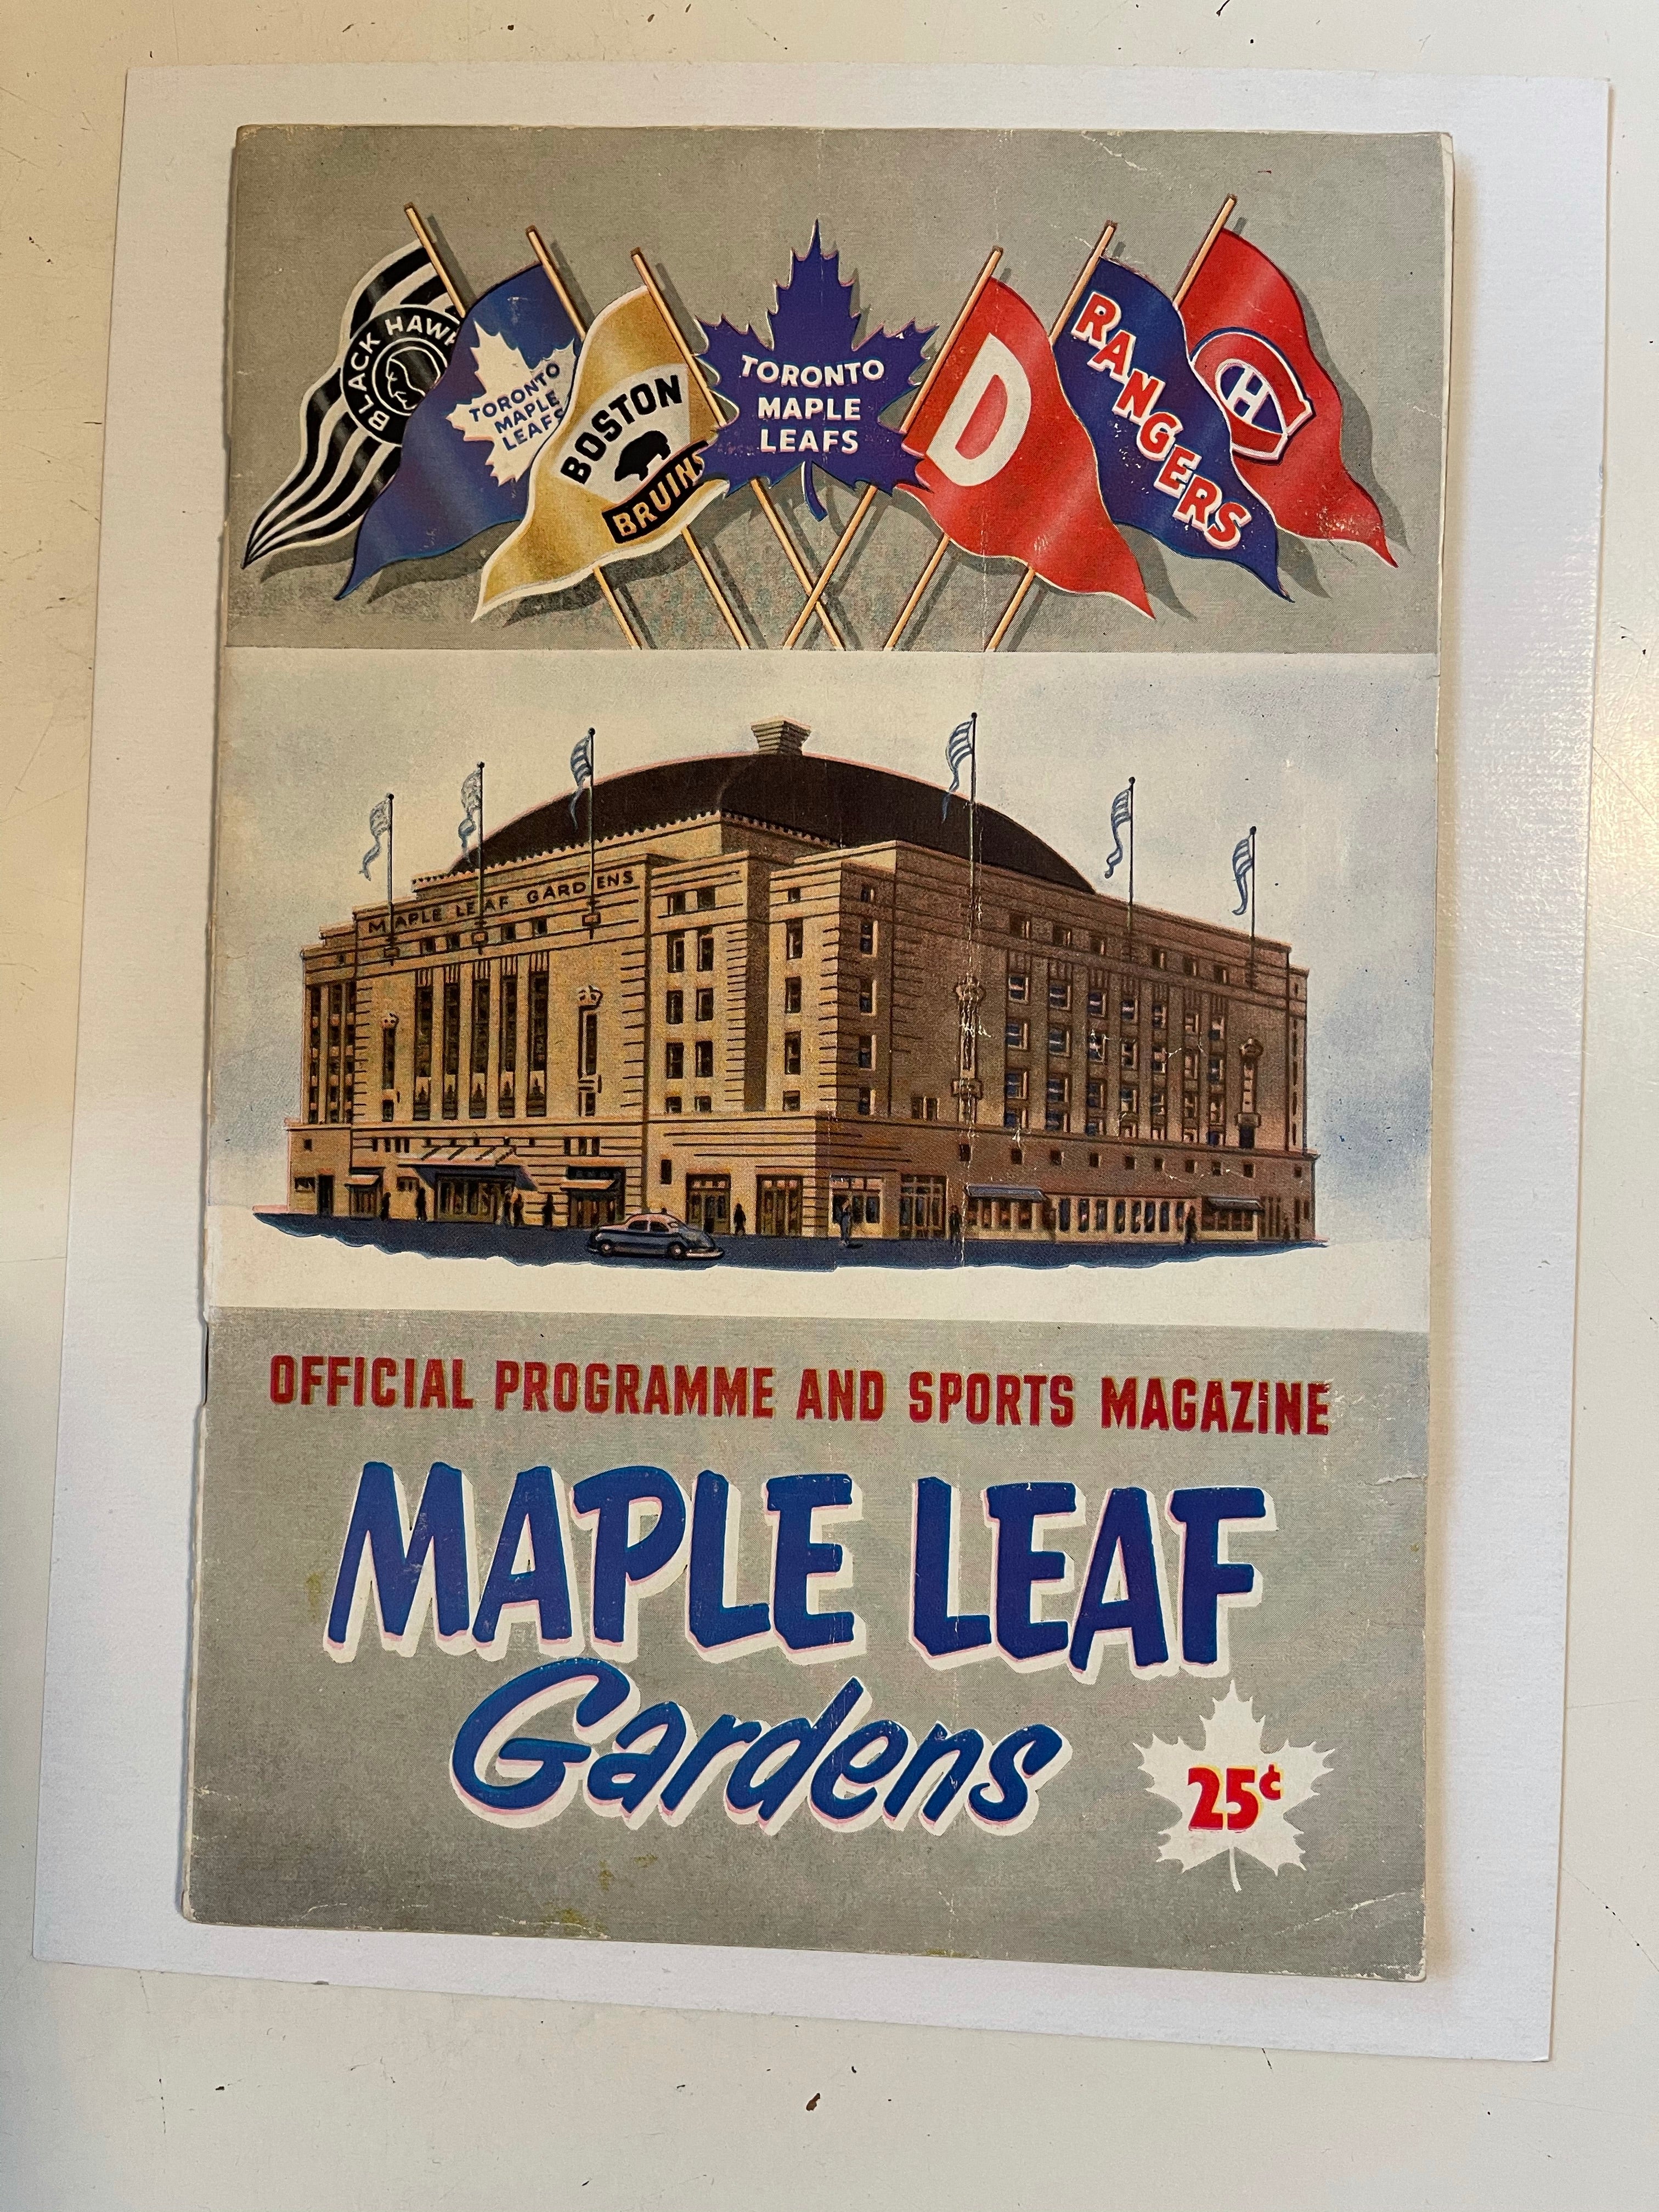 Toronto Maple Leafs hockey game program,Nov.8,1952